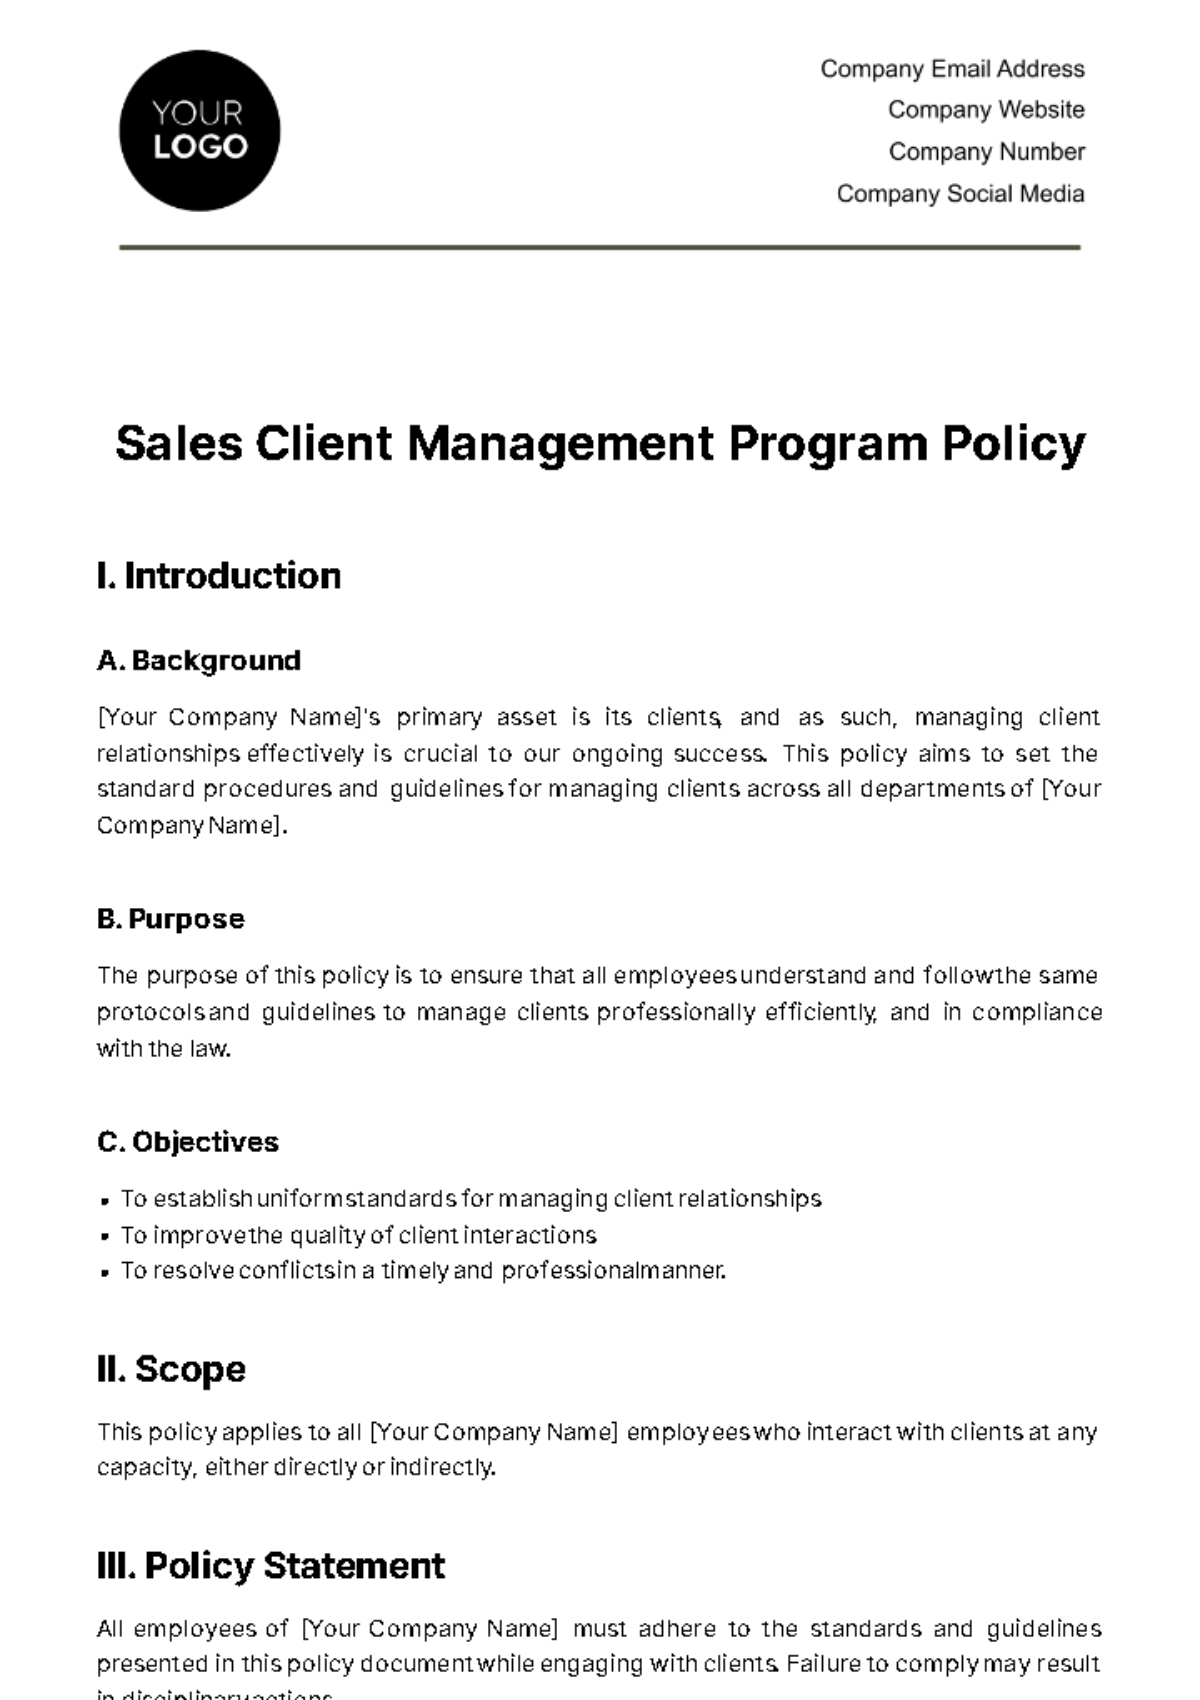 Sales Client Management Program Policy Template